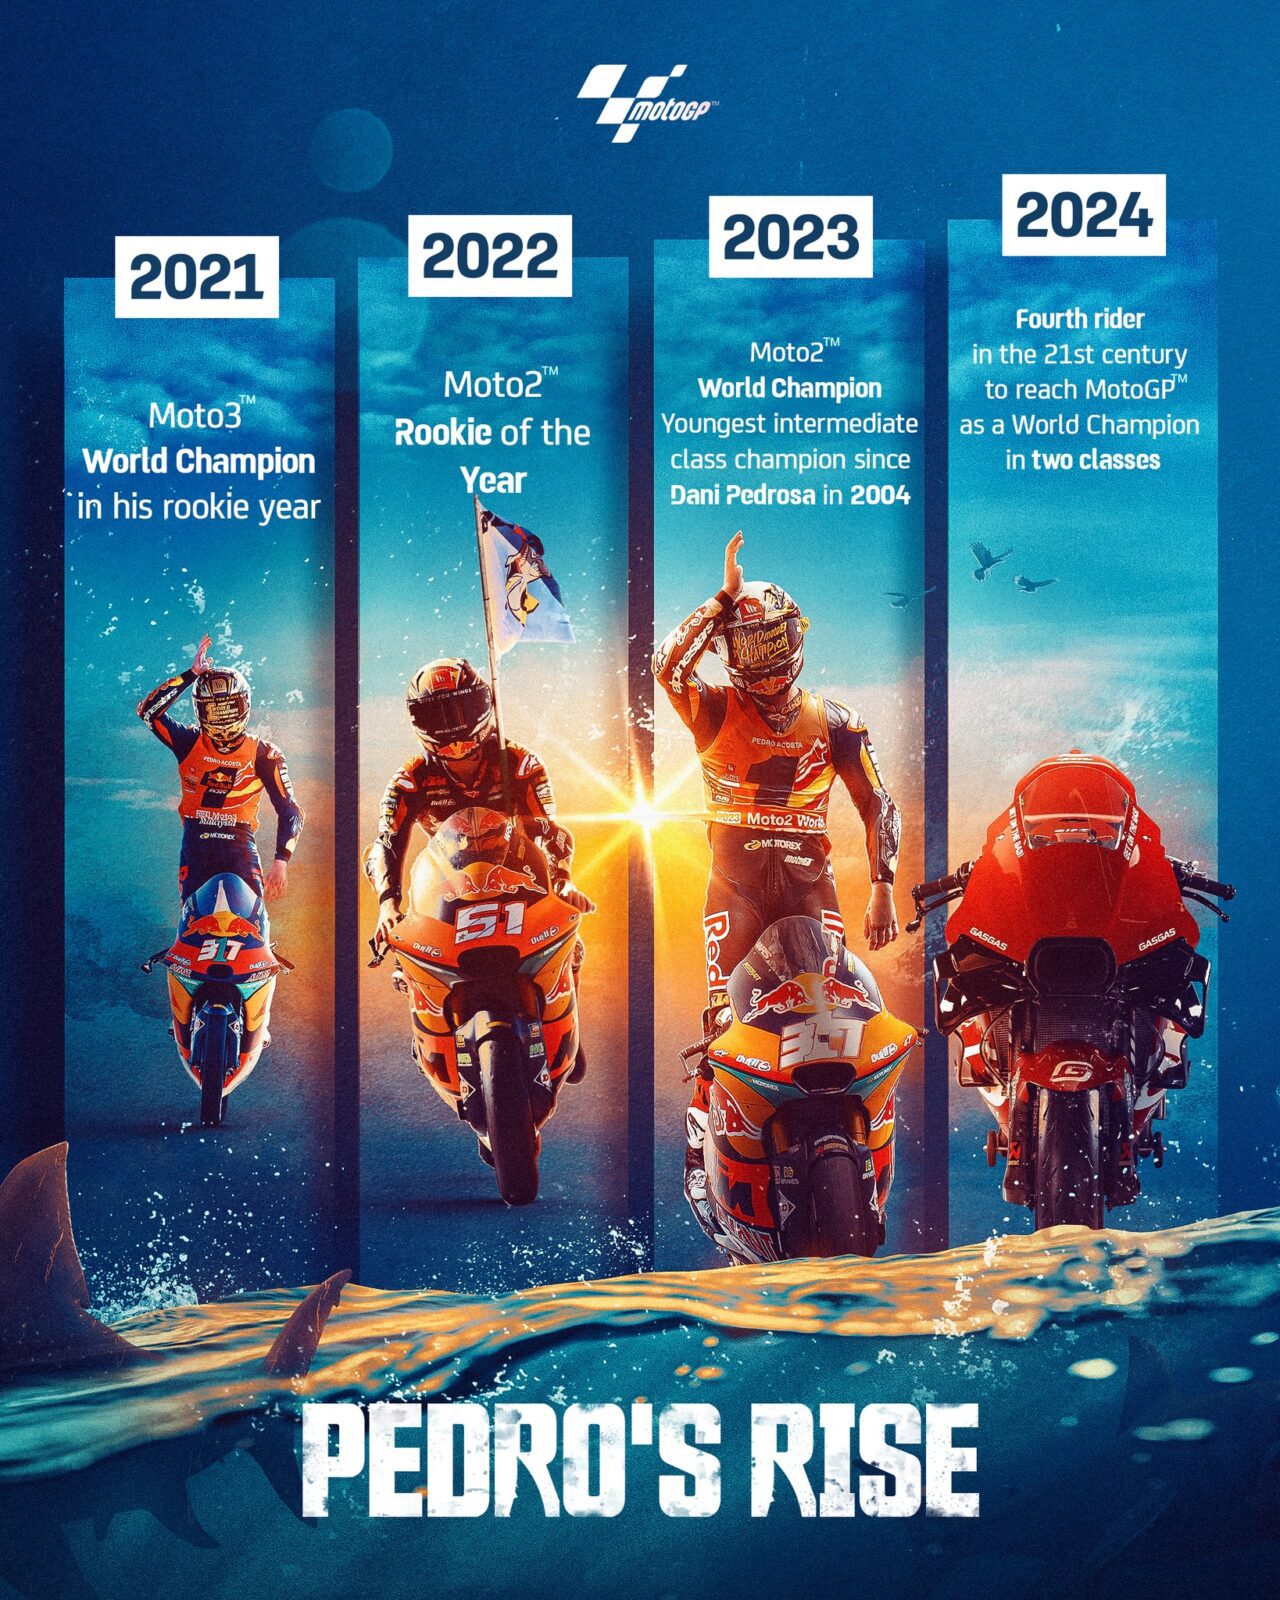 pedro-acosta-moto2-champion-2023-protathlitis-2023-talento-legend-shark